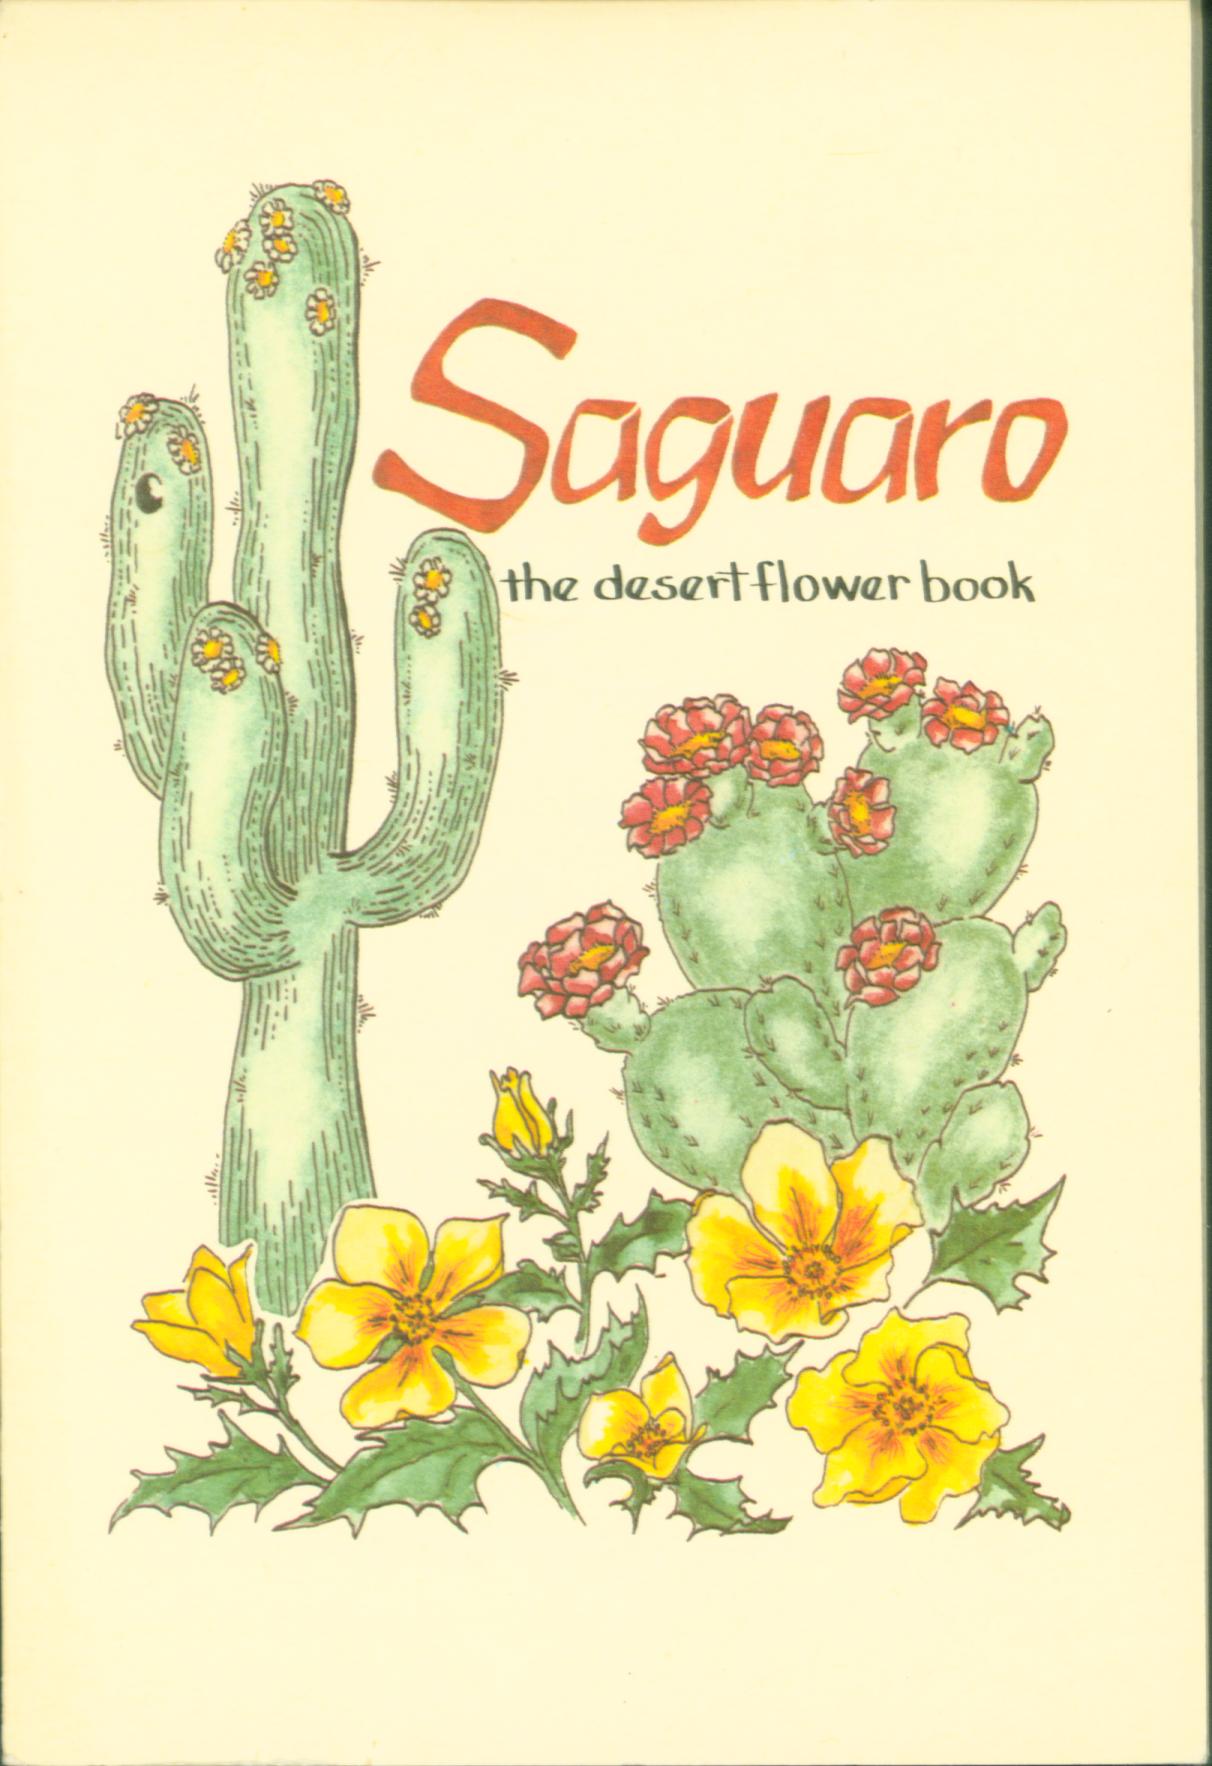 SAGUARO: the desert flower book. 